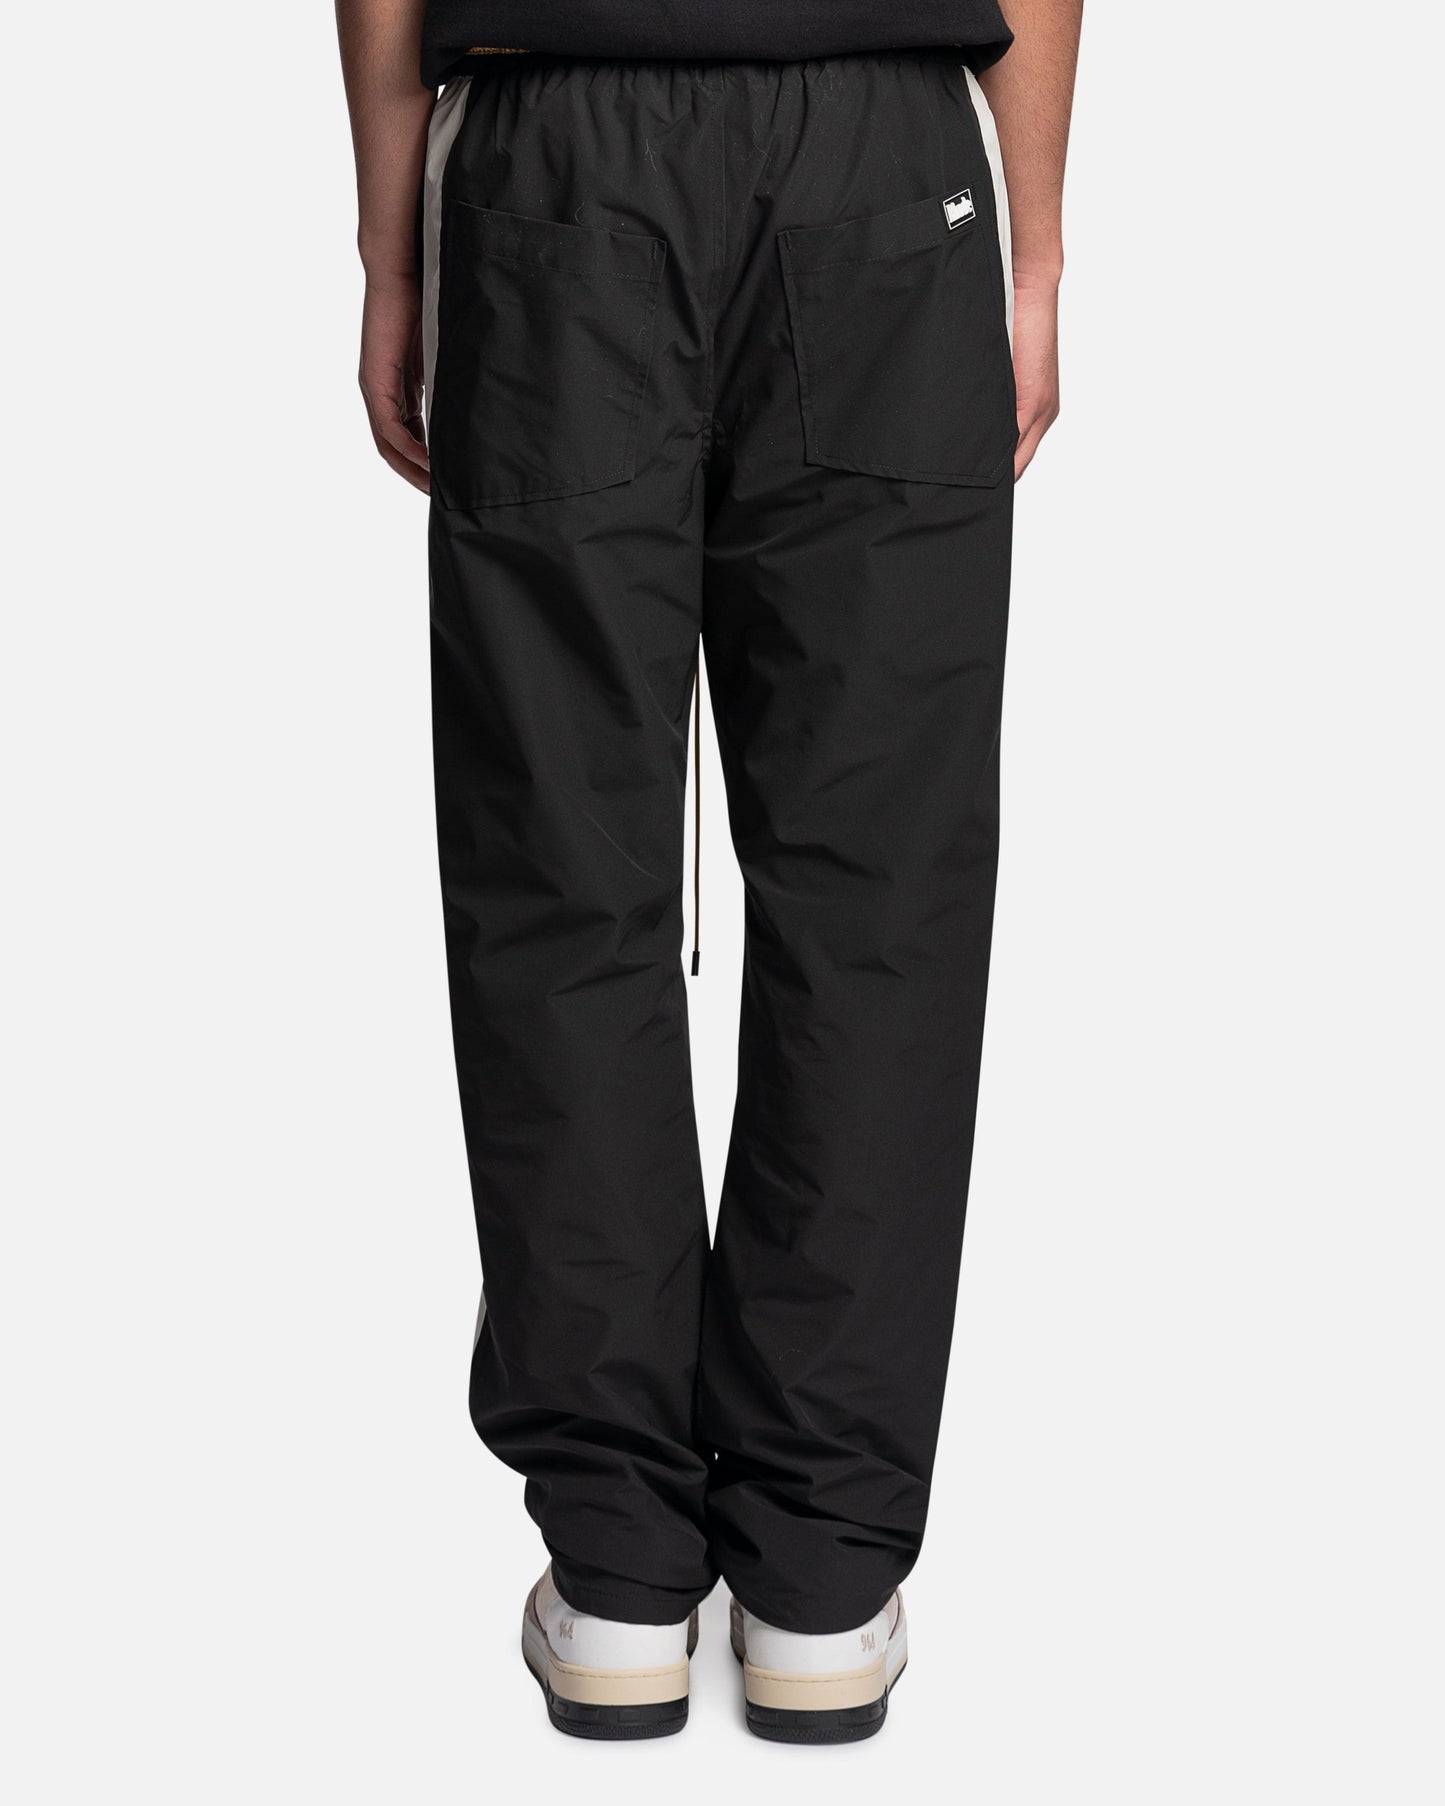 Rhude Men's Pants Curve Panel Track Pant in Black/Creme